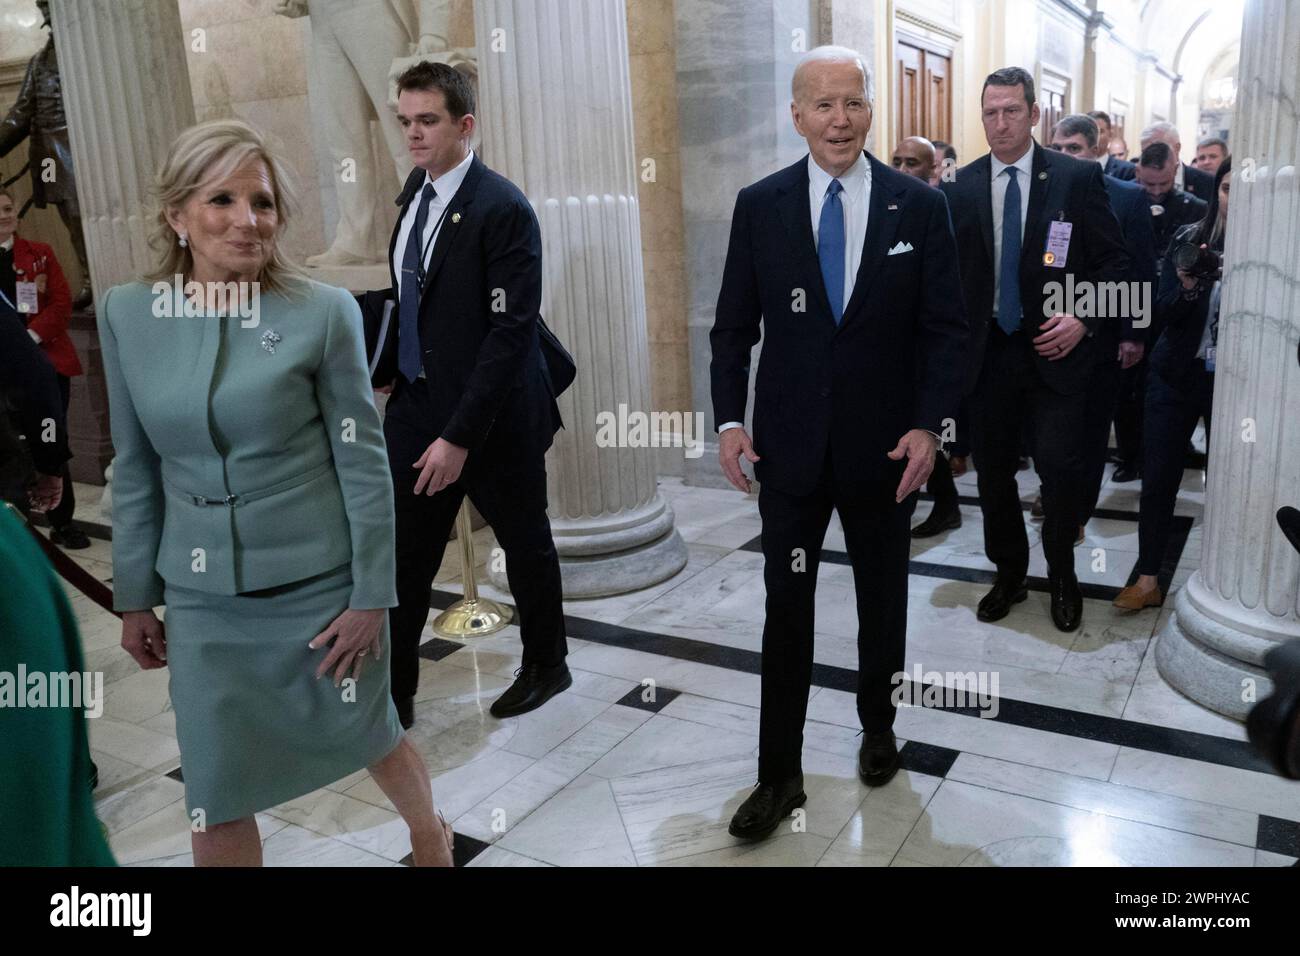 United States President Joe Biden and first lady Dr. Jill Biden arrive